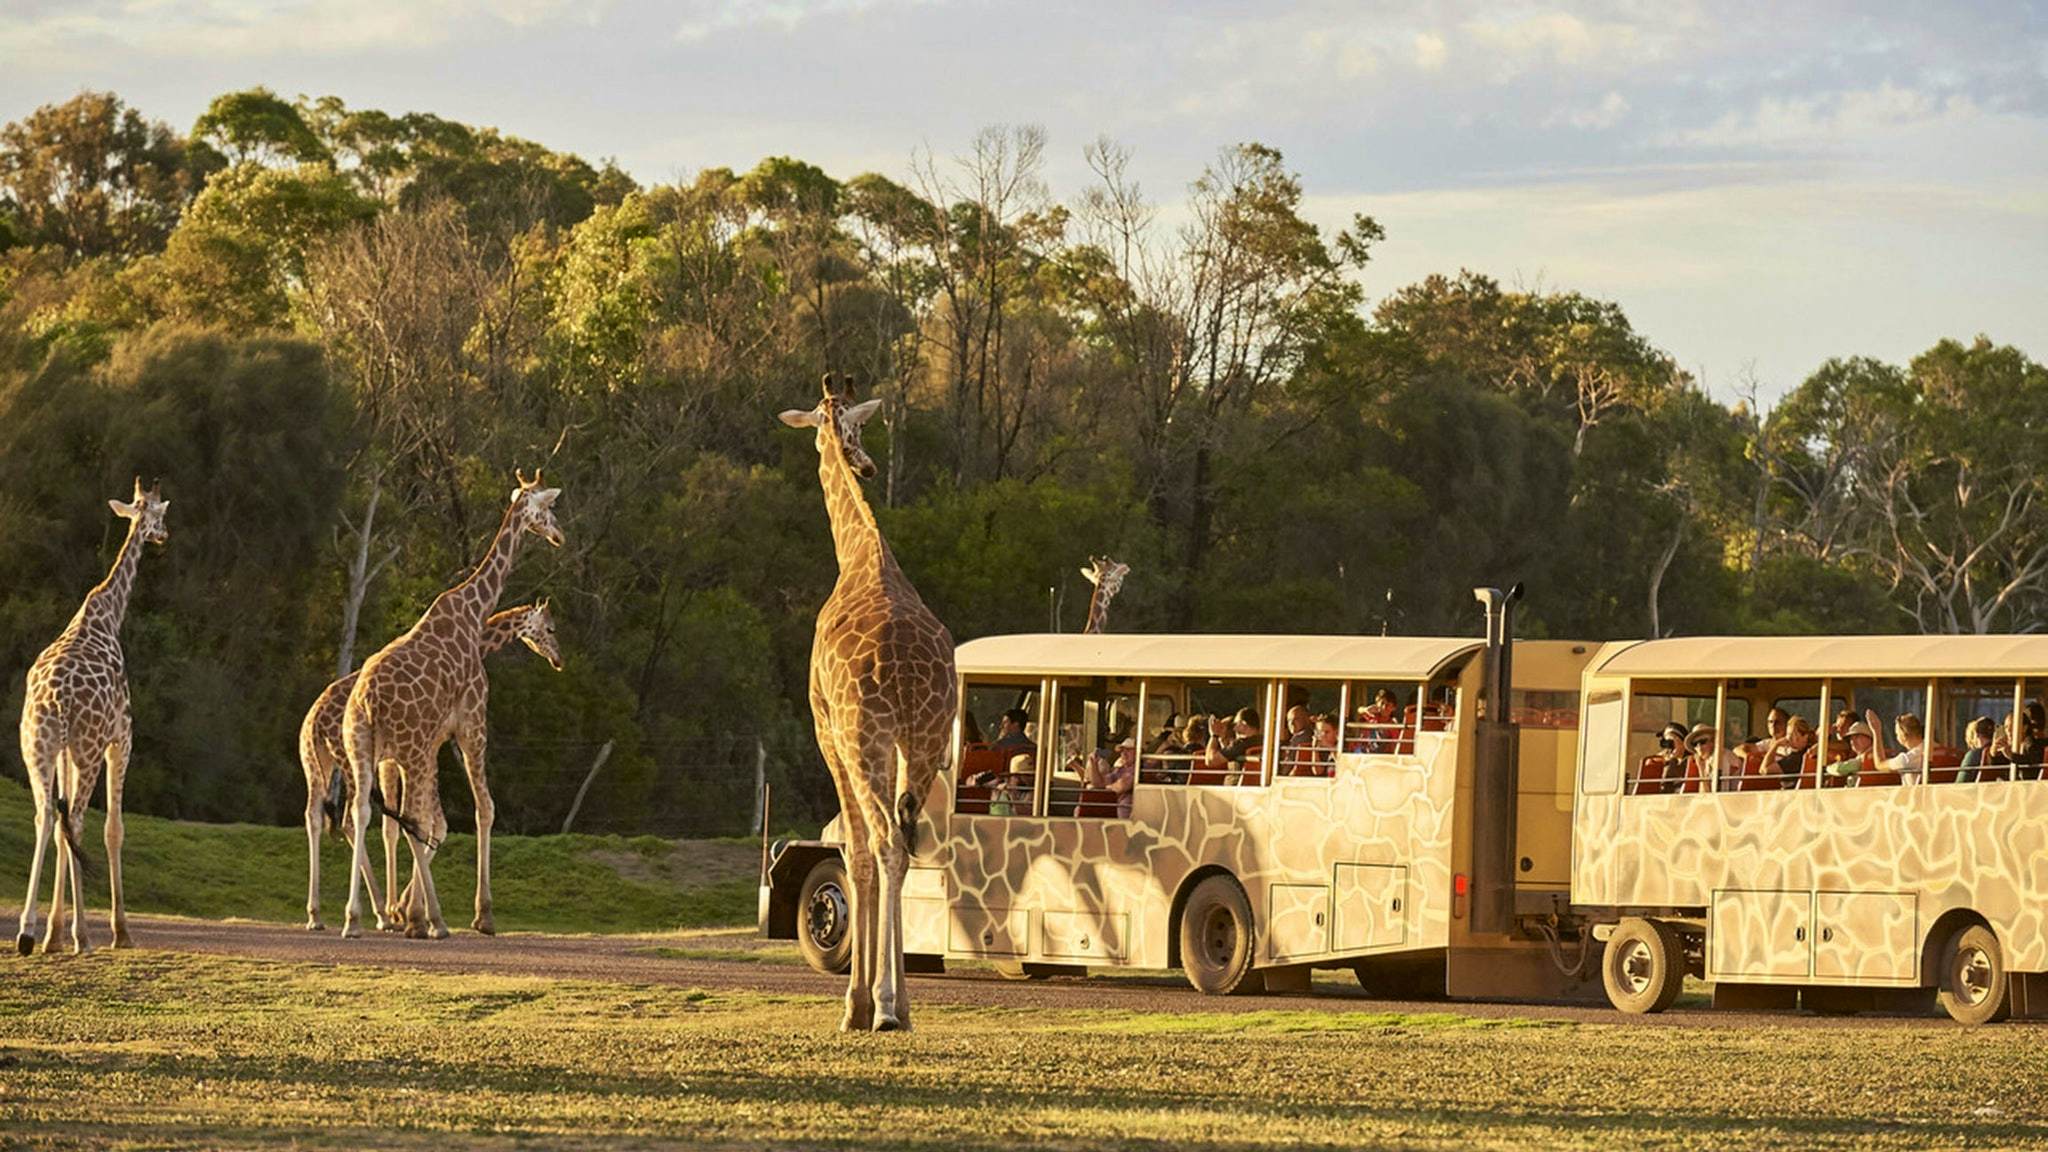 Werribee Open Range Zoo Sunset Safari Experience from Melbourne